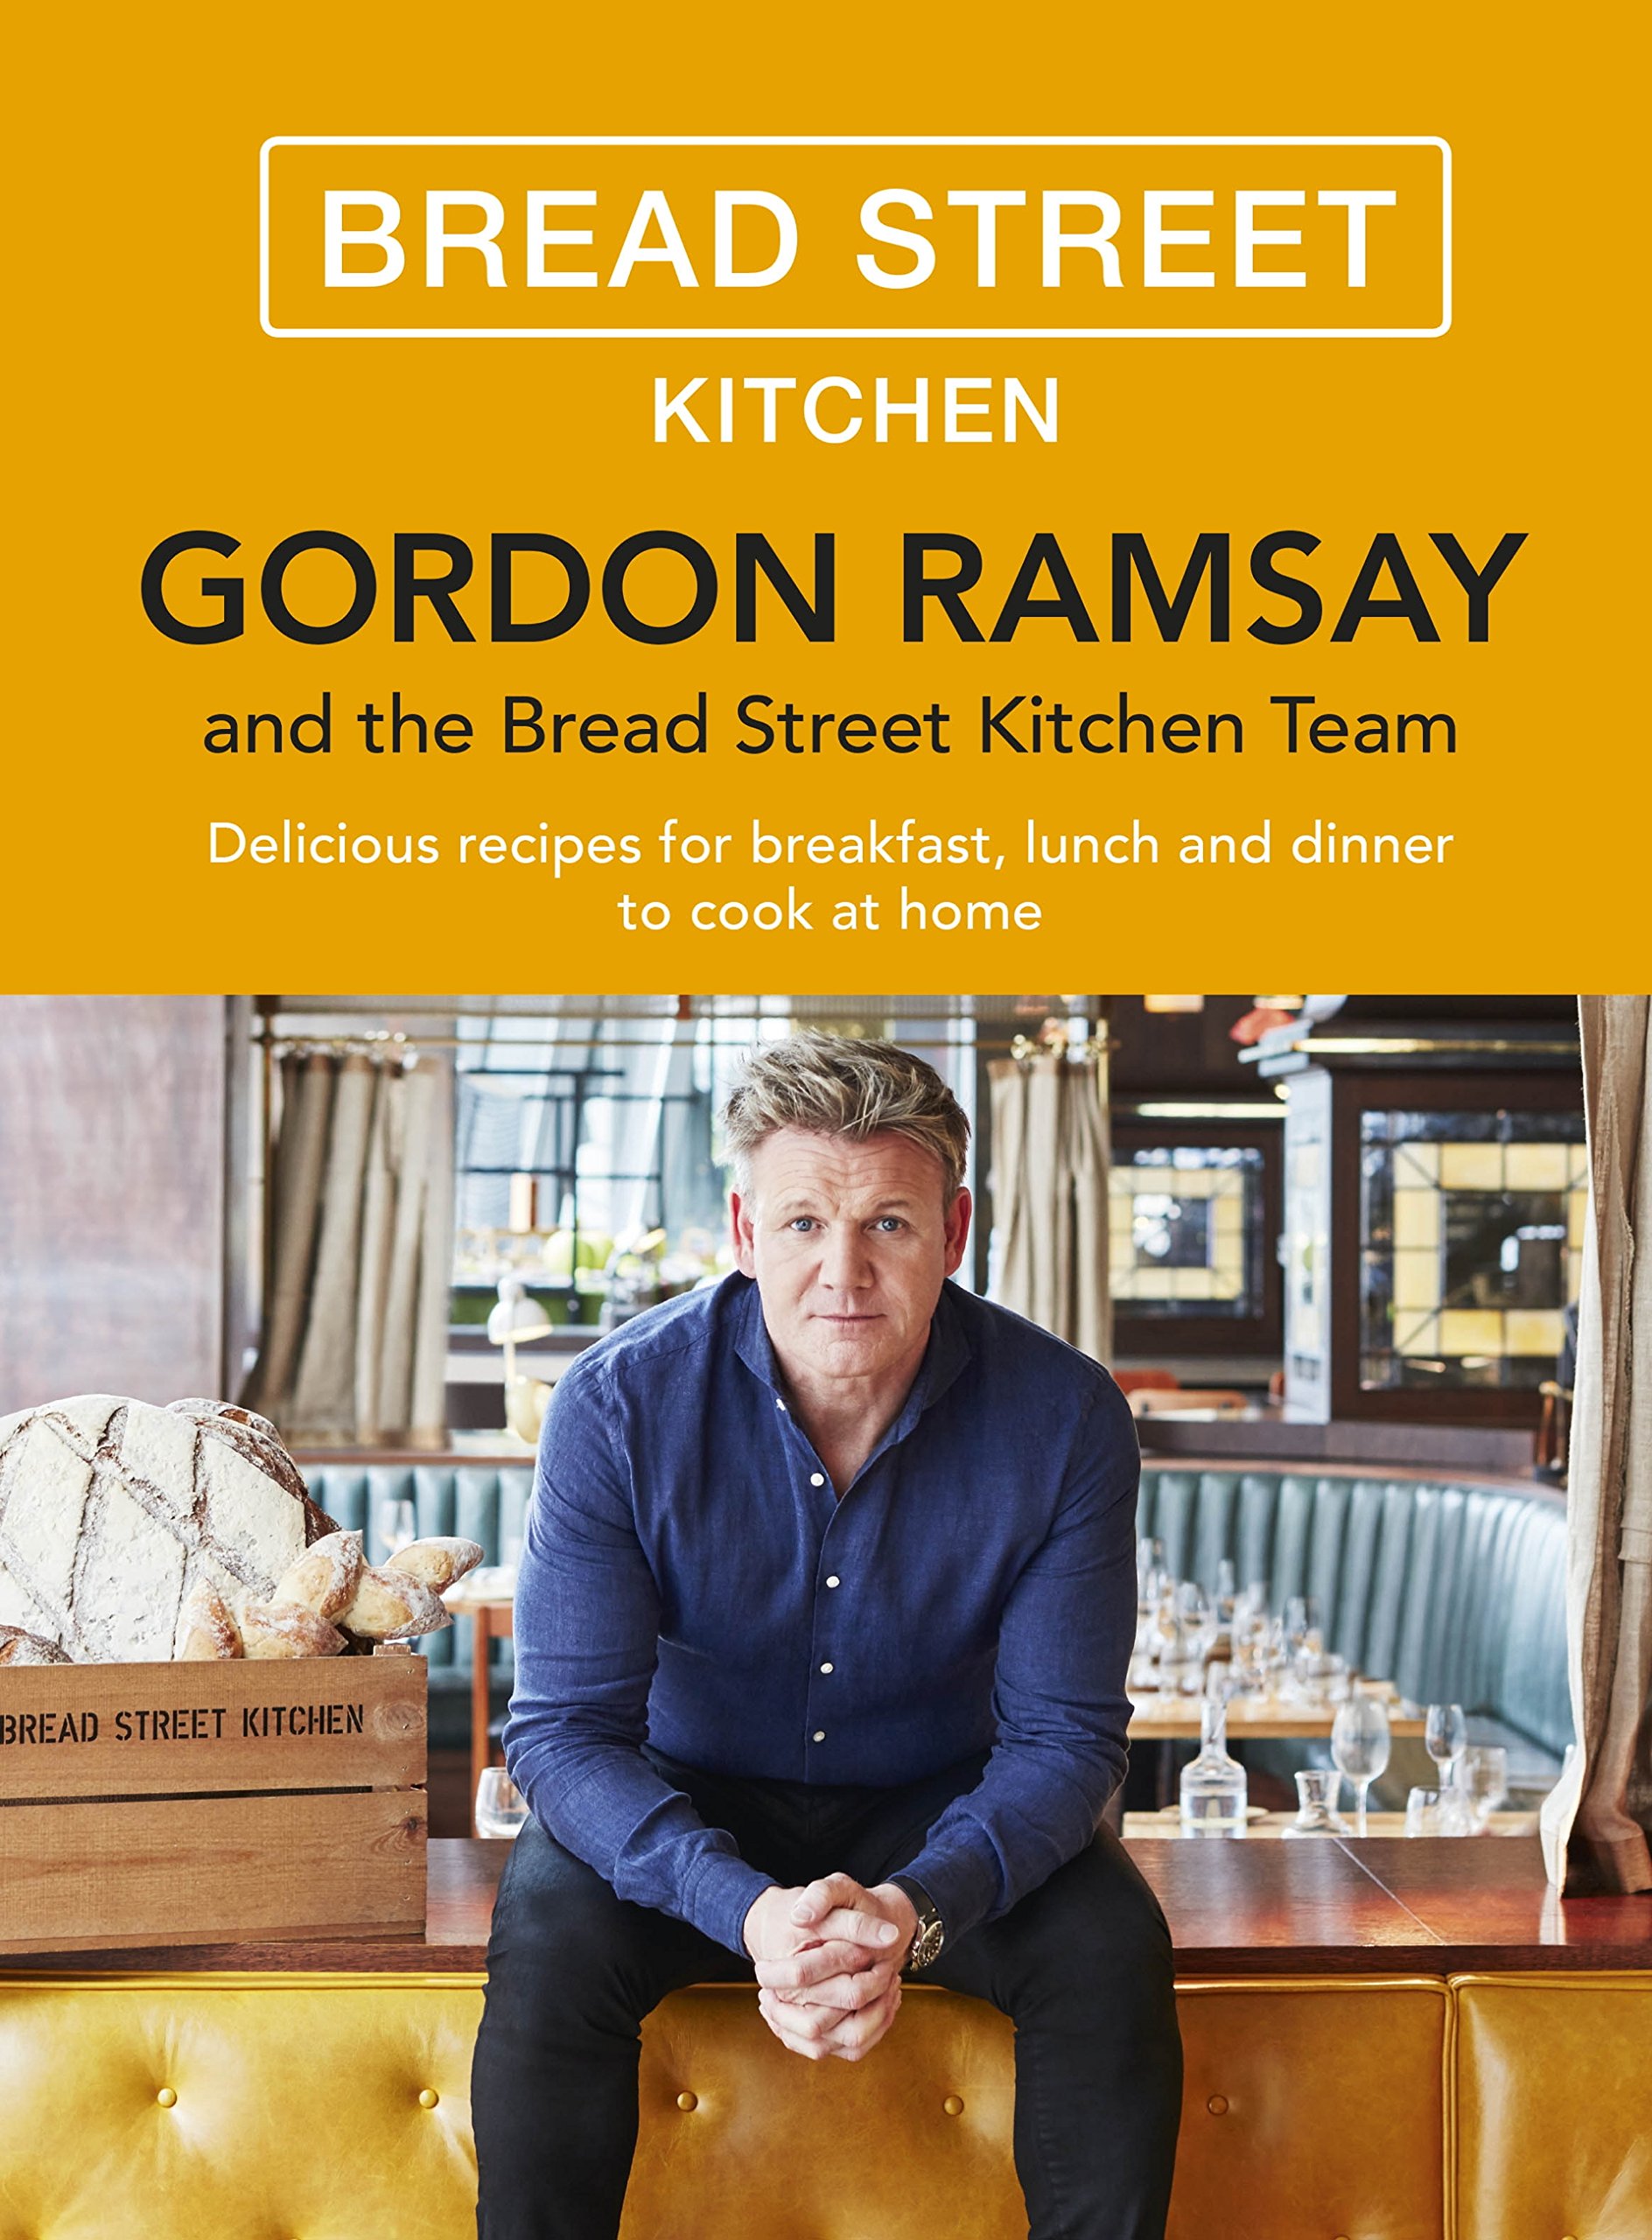 Gordon Ramsay Bread Street Kitchen OR Tana Ramsay Home Made eBooks $3 @ Barnes and Noble, Google Play Store, Rakutan Kobo, Amazon Kindle